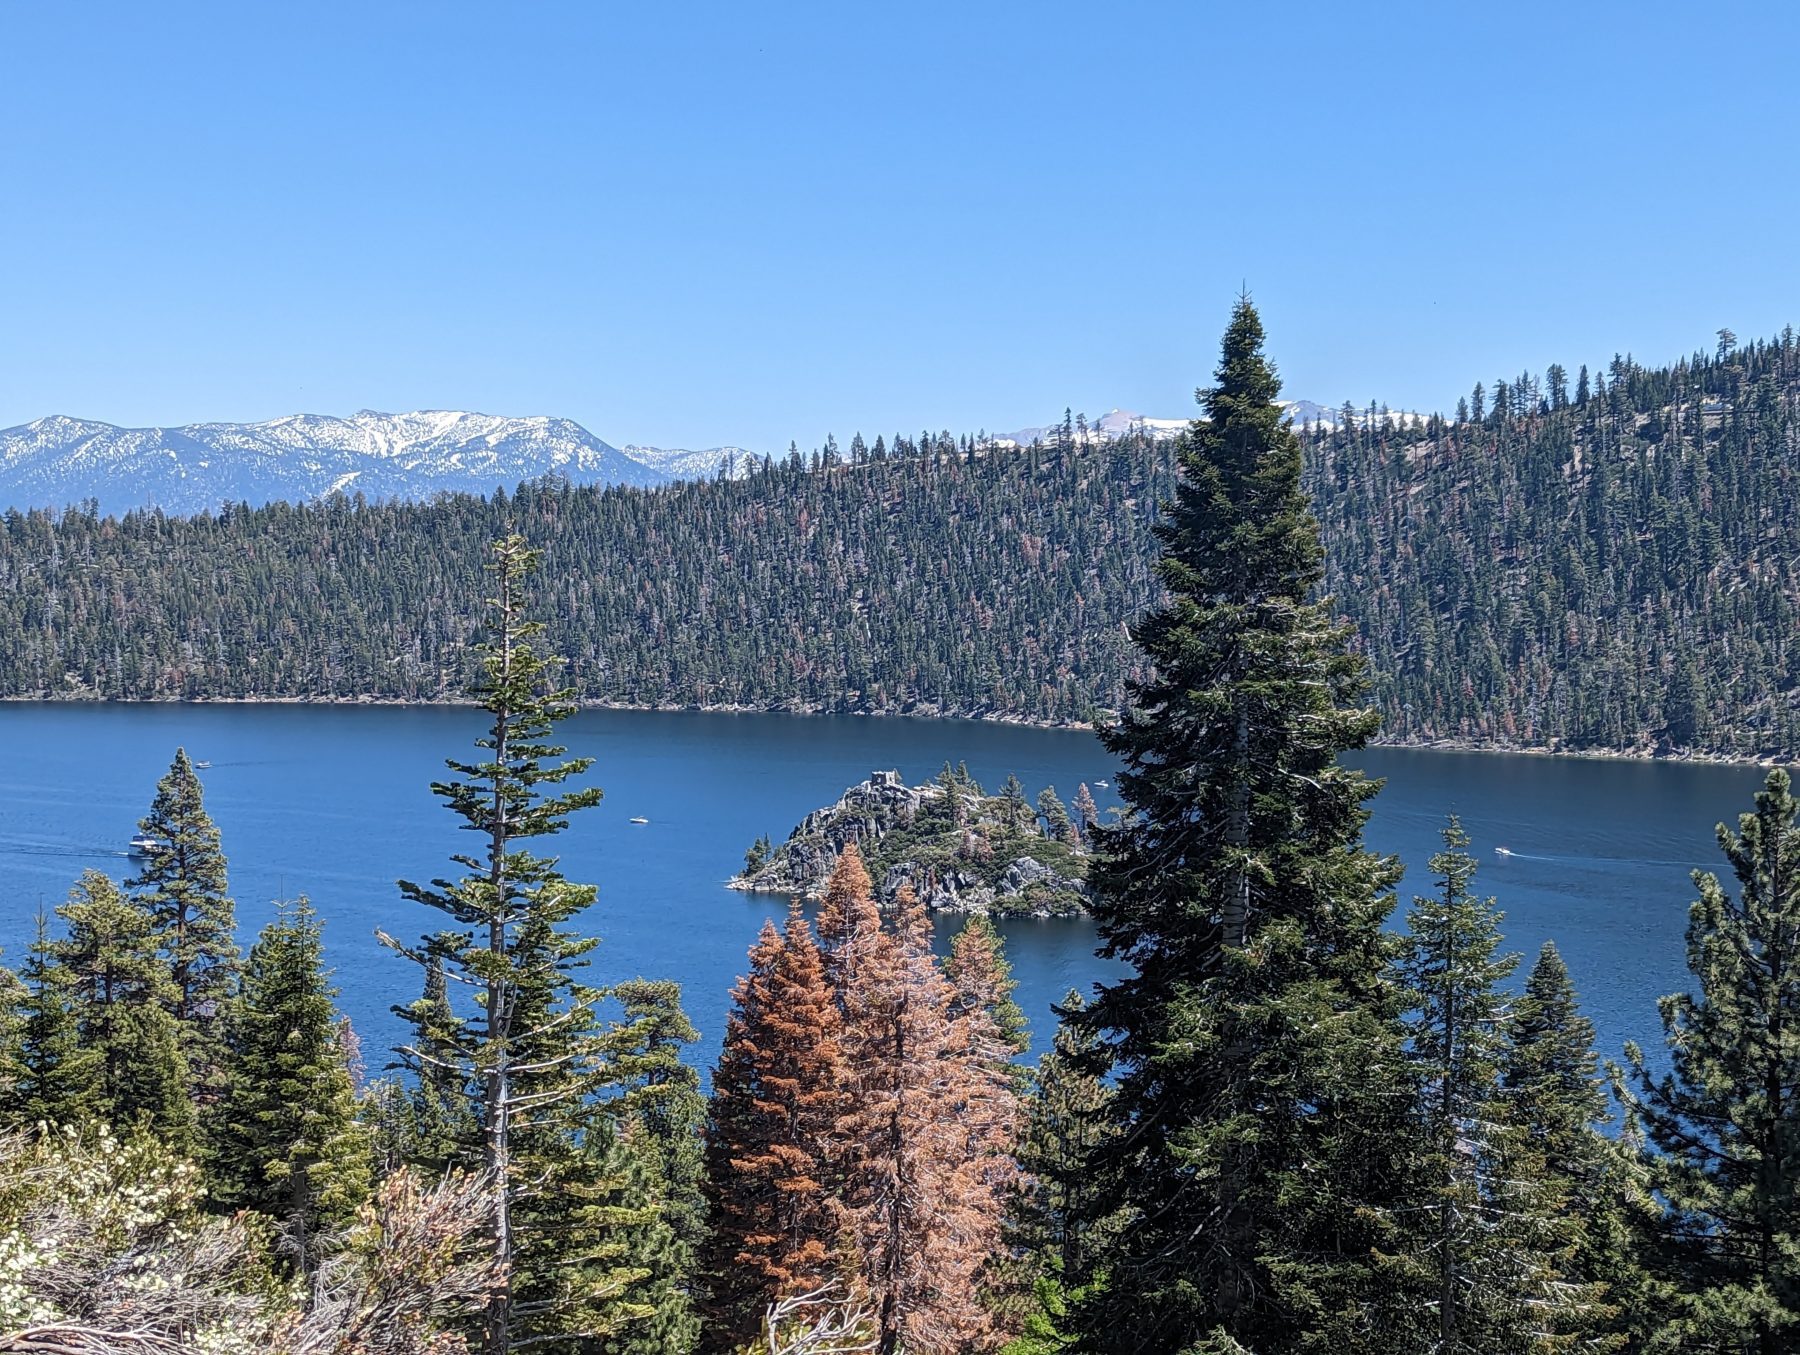 Hiking trails in South Lake Tahoe - emrald Bay